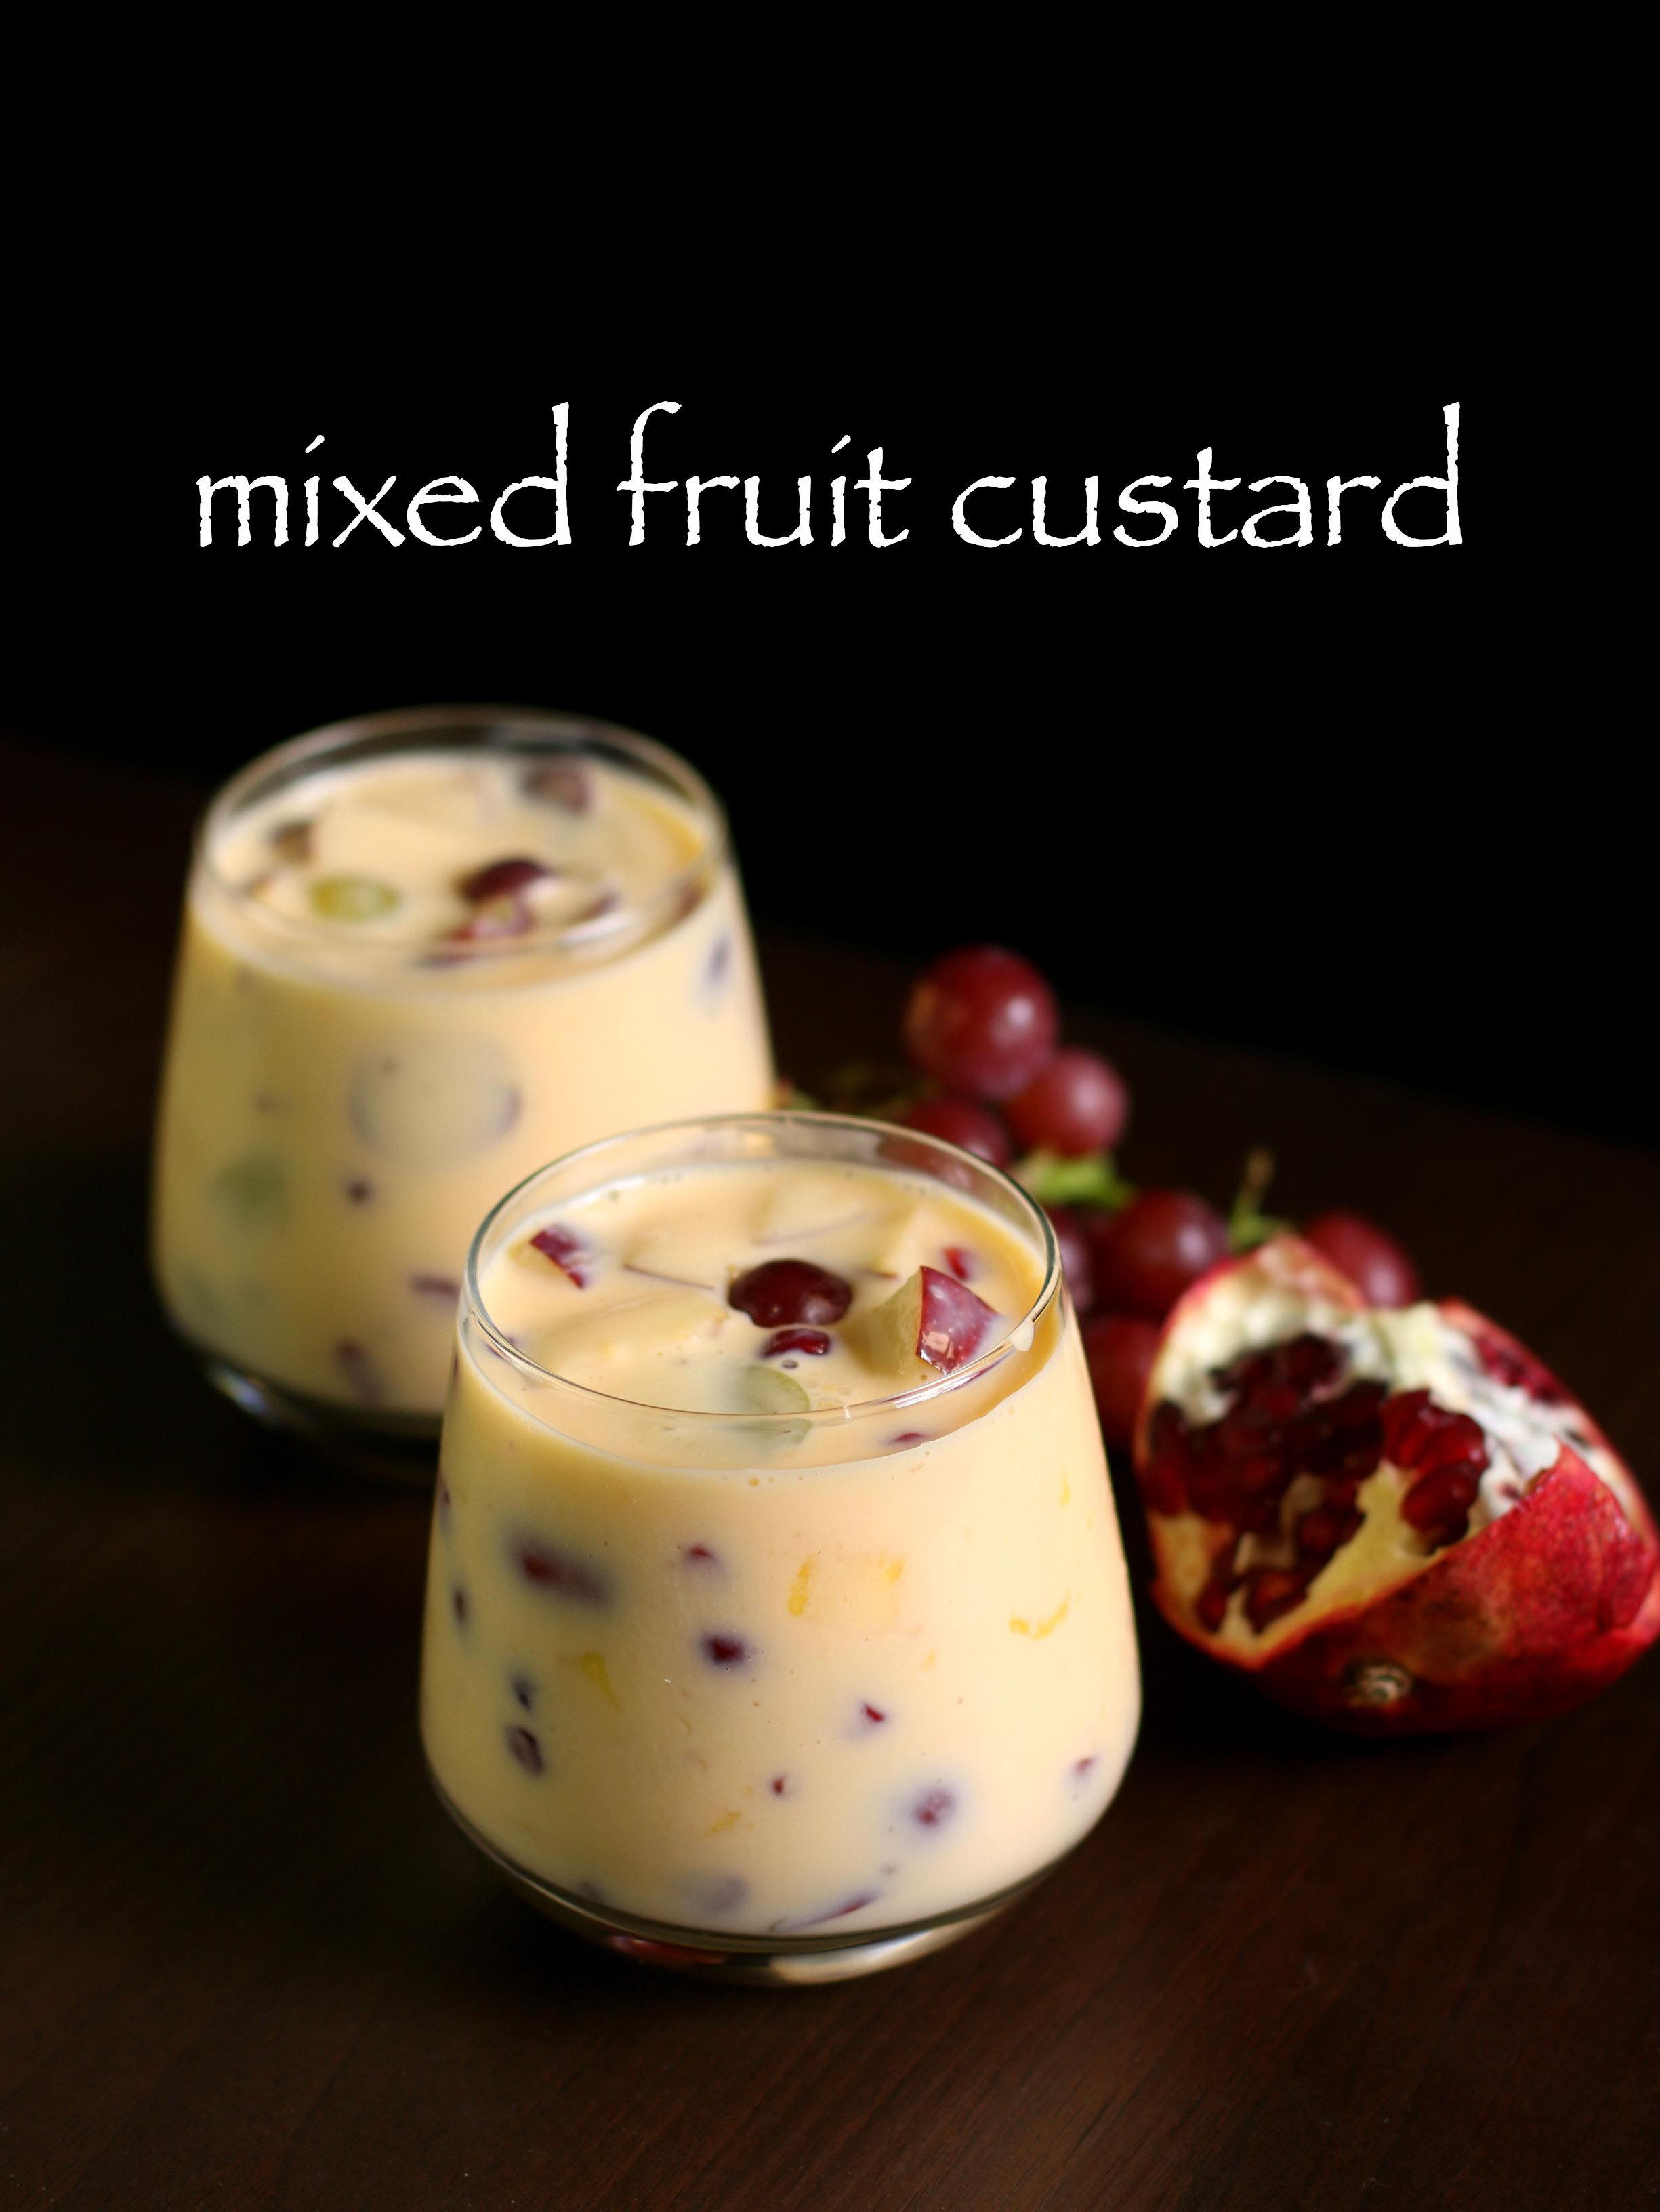 Fruit custard recipe /How to make fruit custard at home without readymade custard powder - Desi Cooking Recipes